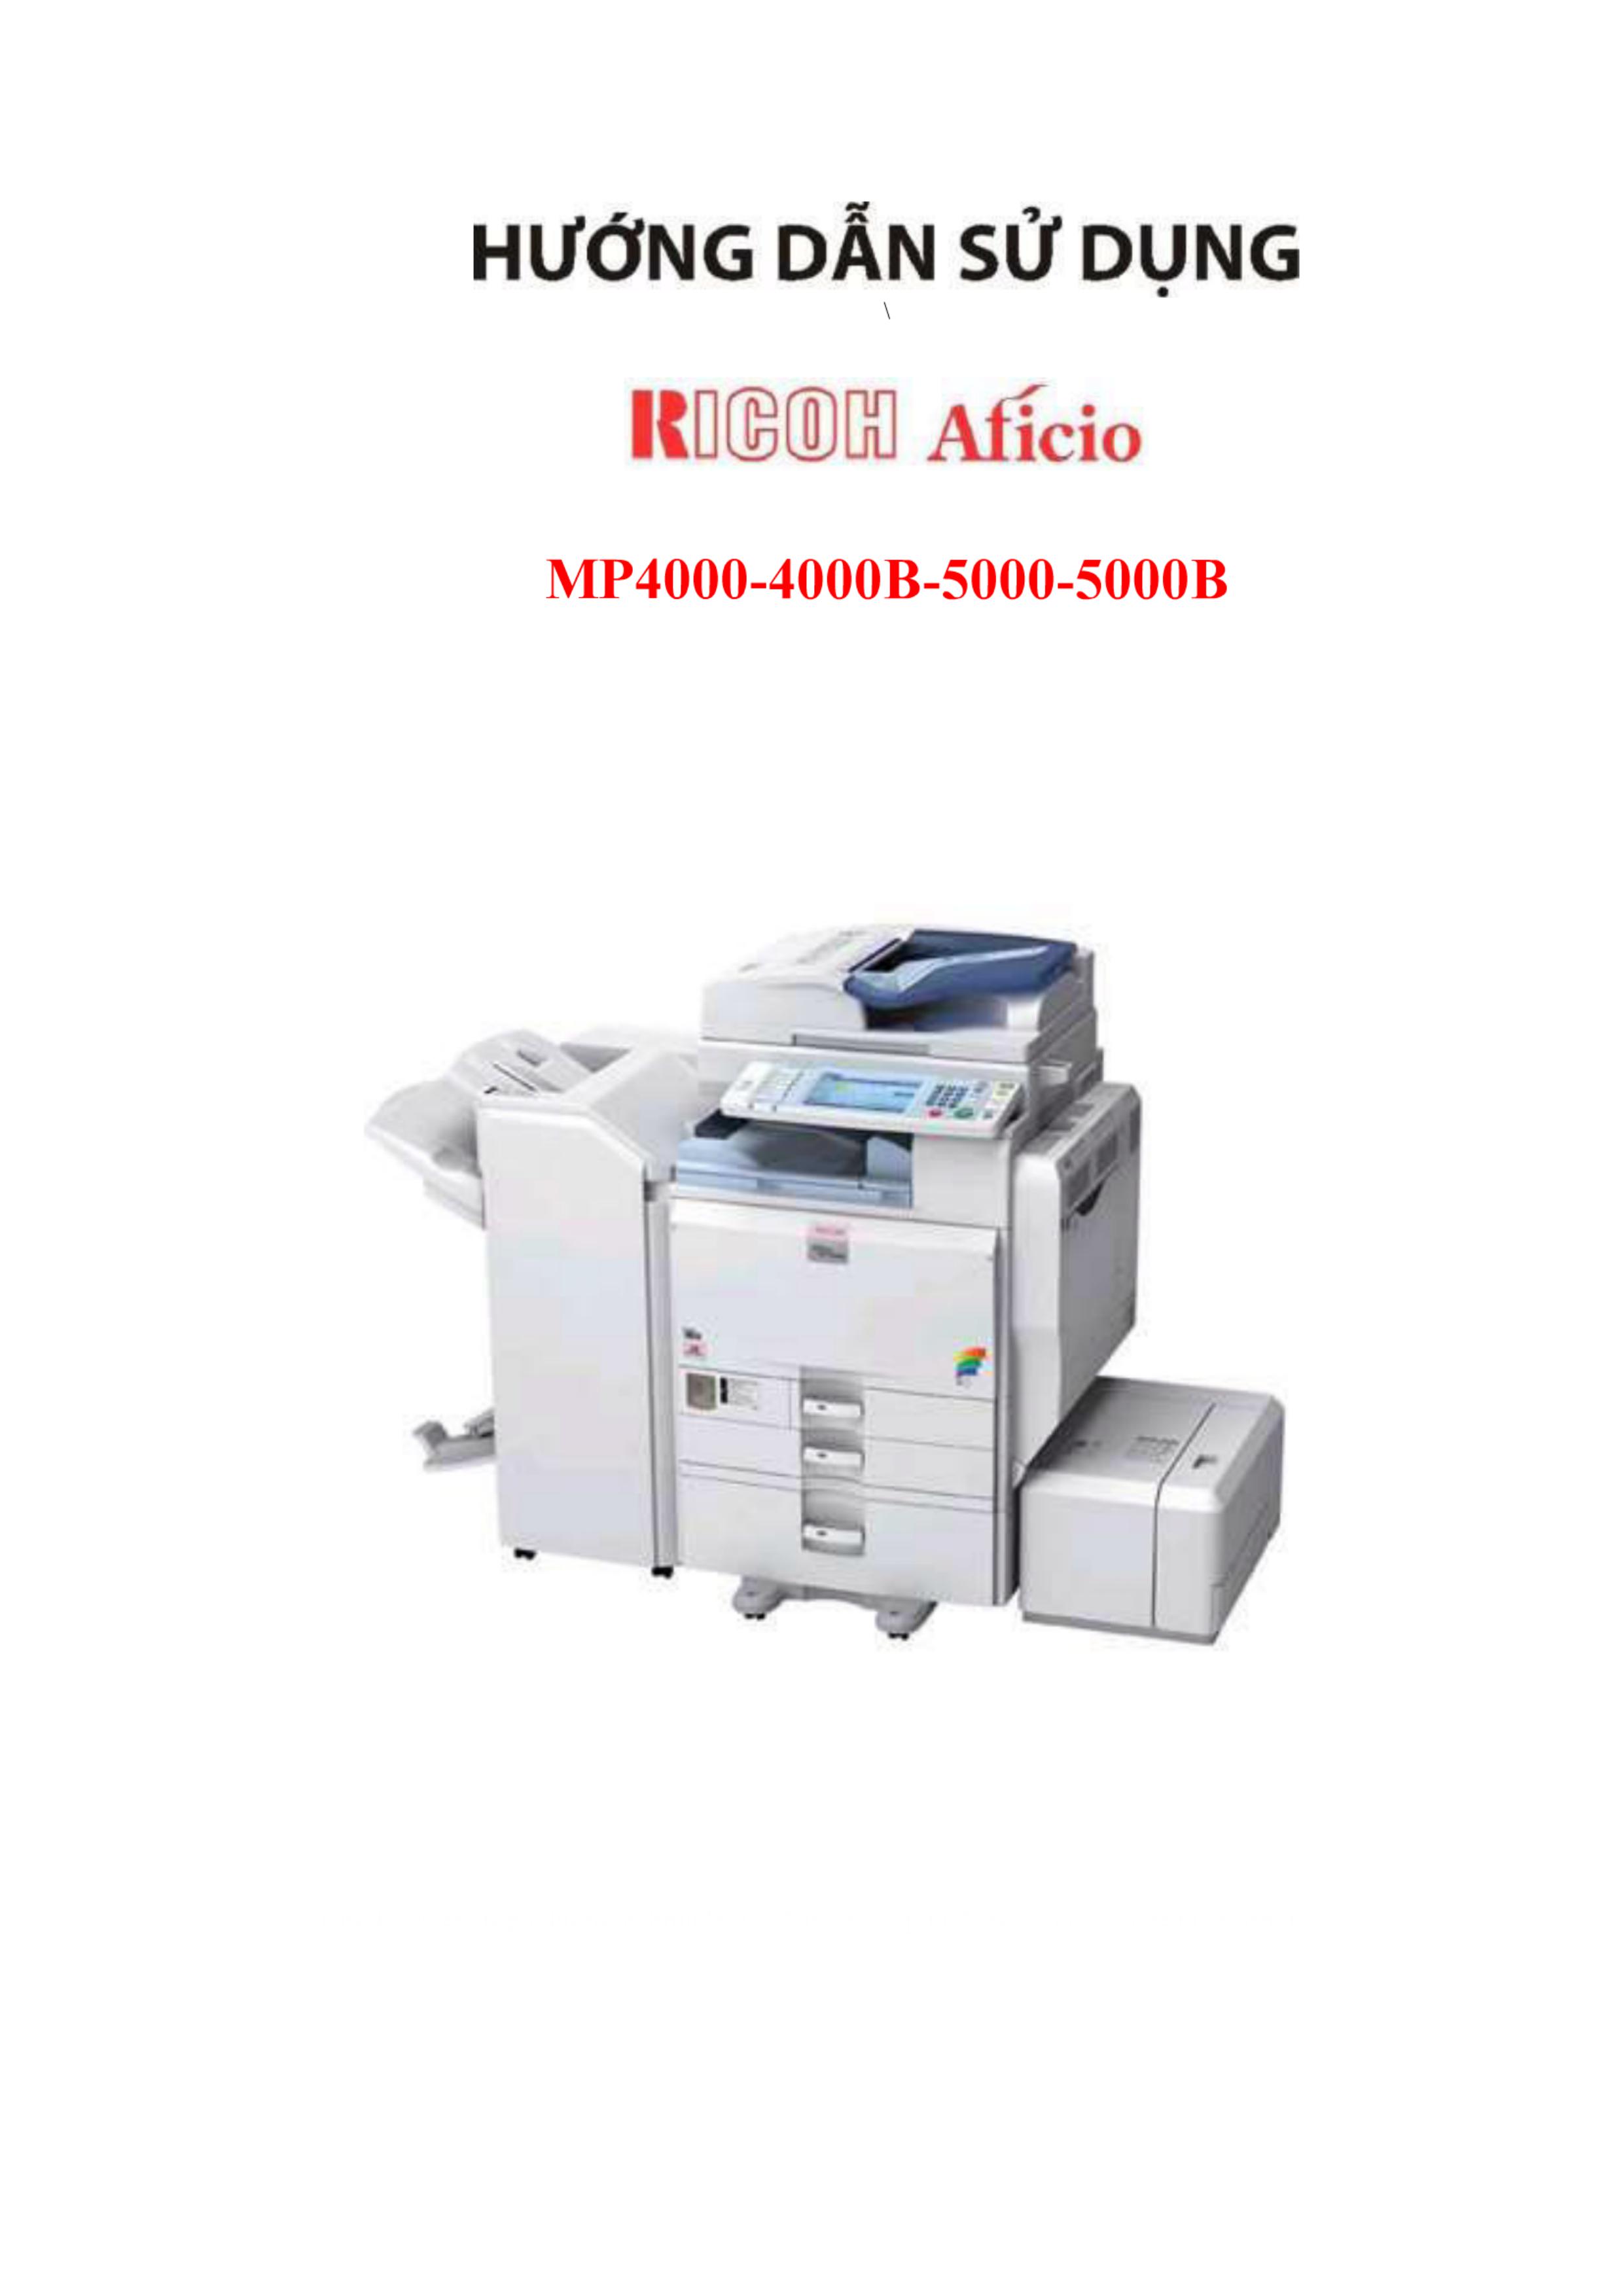 Hướng dẫn sử dụng máy photocopy Ricoh Aficio MP 4000- MP400B - MP5000 - MP5000B